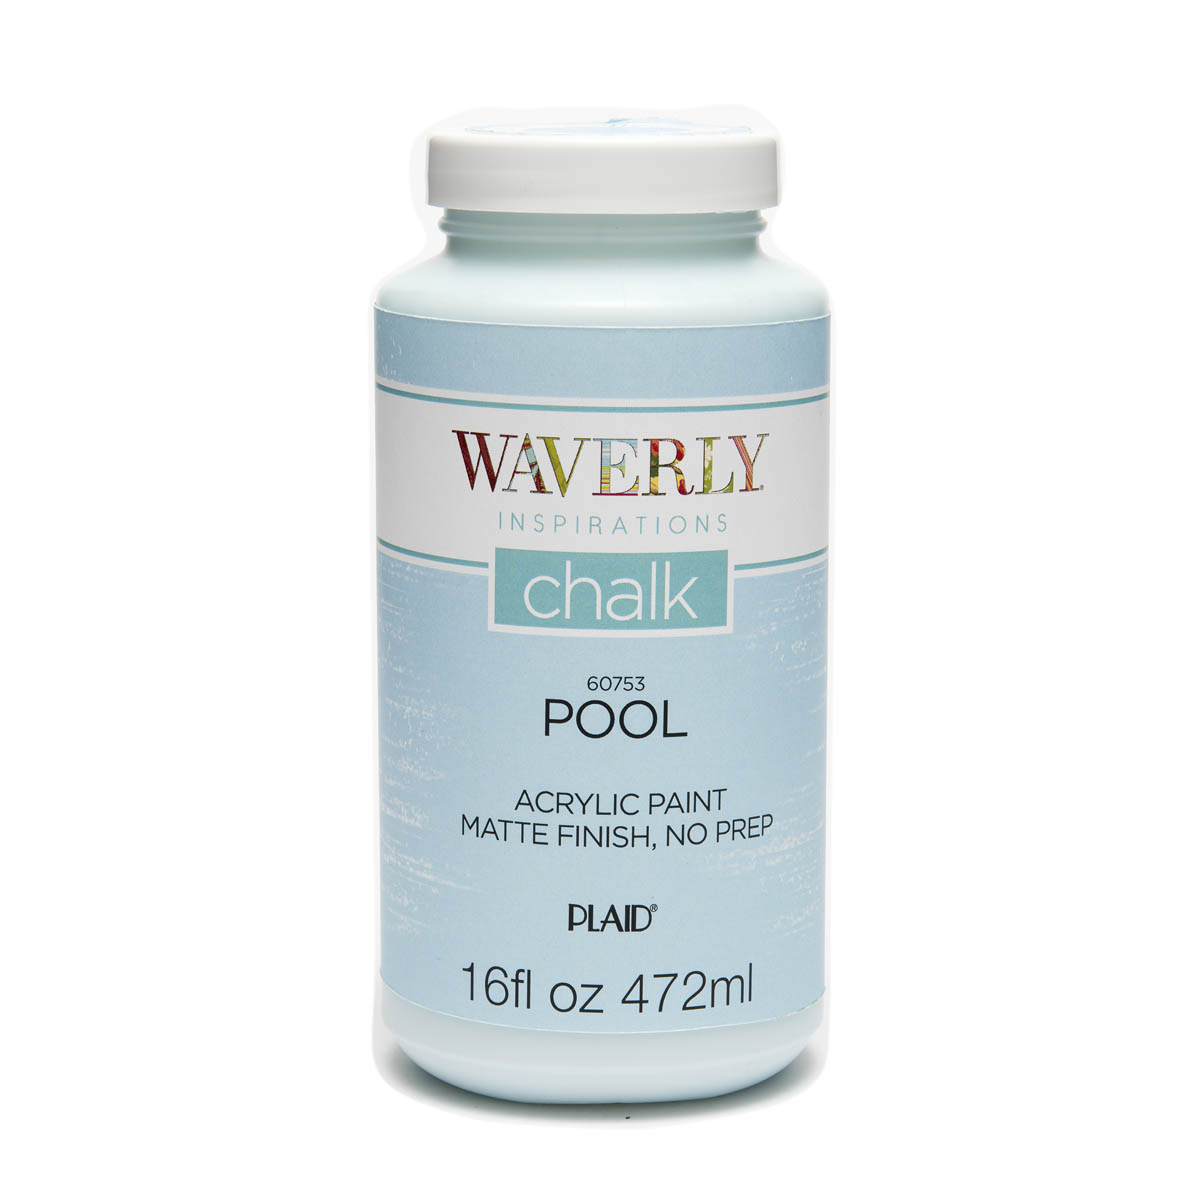 Waverly ® Inspirations Chalk Finish Acrylic Paint - Pool, 16 oz. - 60753E